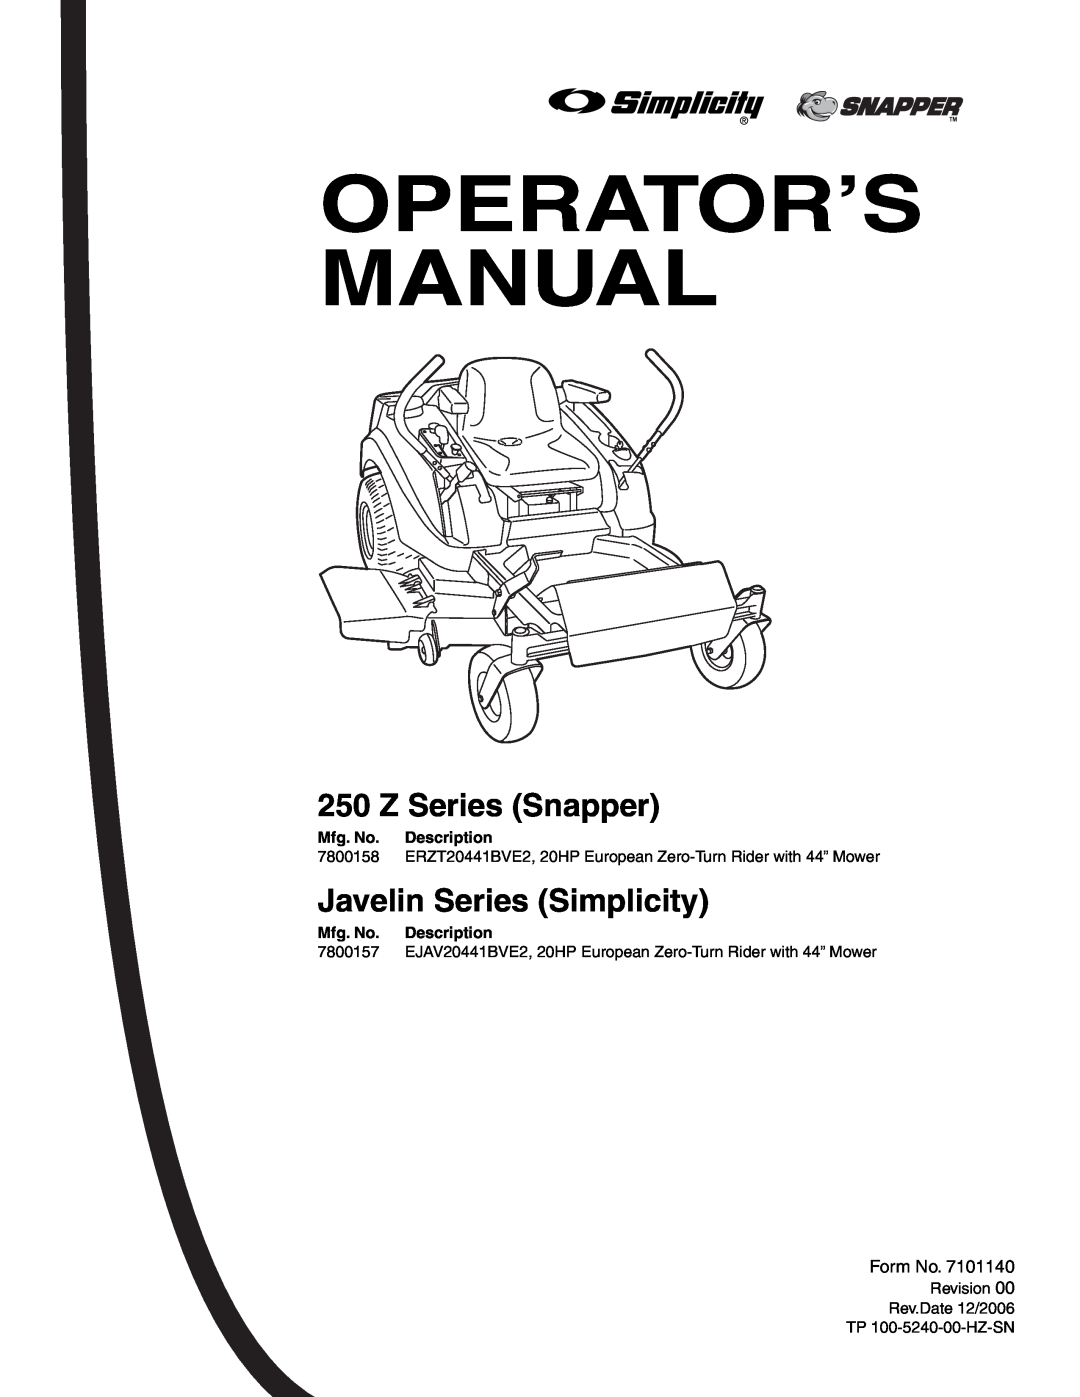 Snapper ERZT20441BVE2 manual Z Series Snapper, Javelin Series Simplicity, Operator’S Manual, Mfg. No. Description 